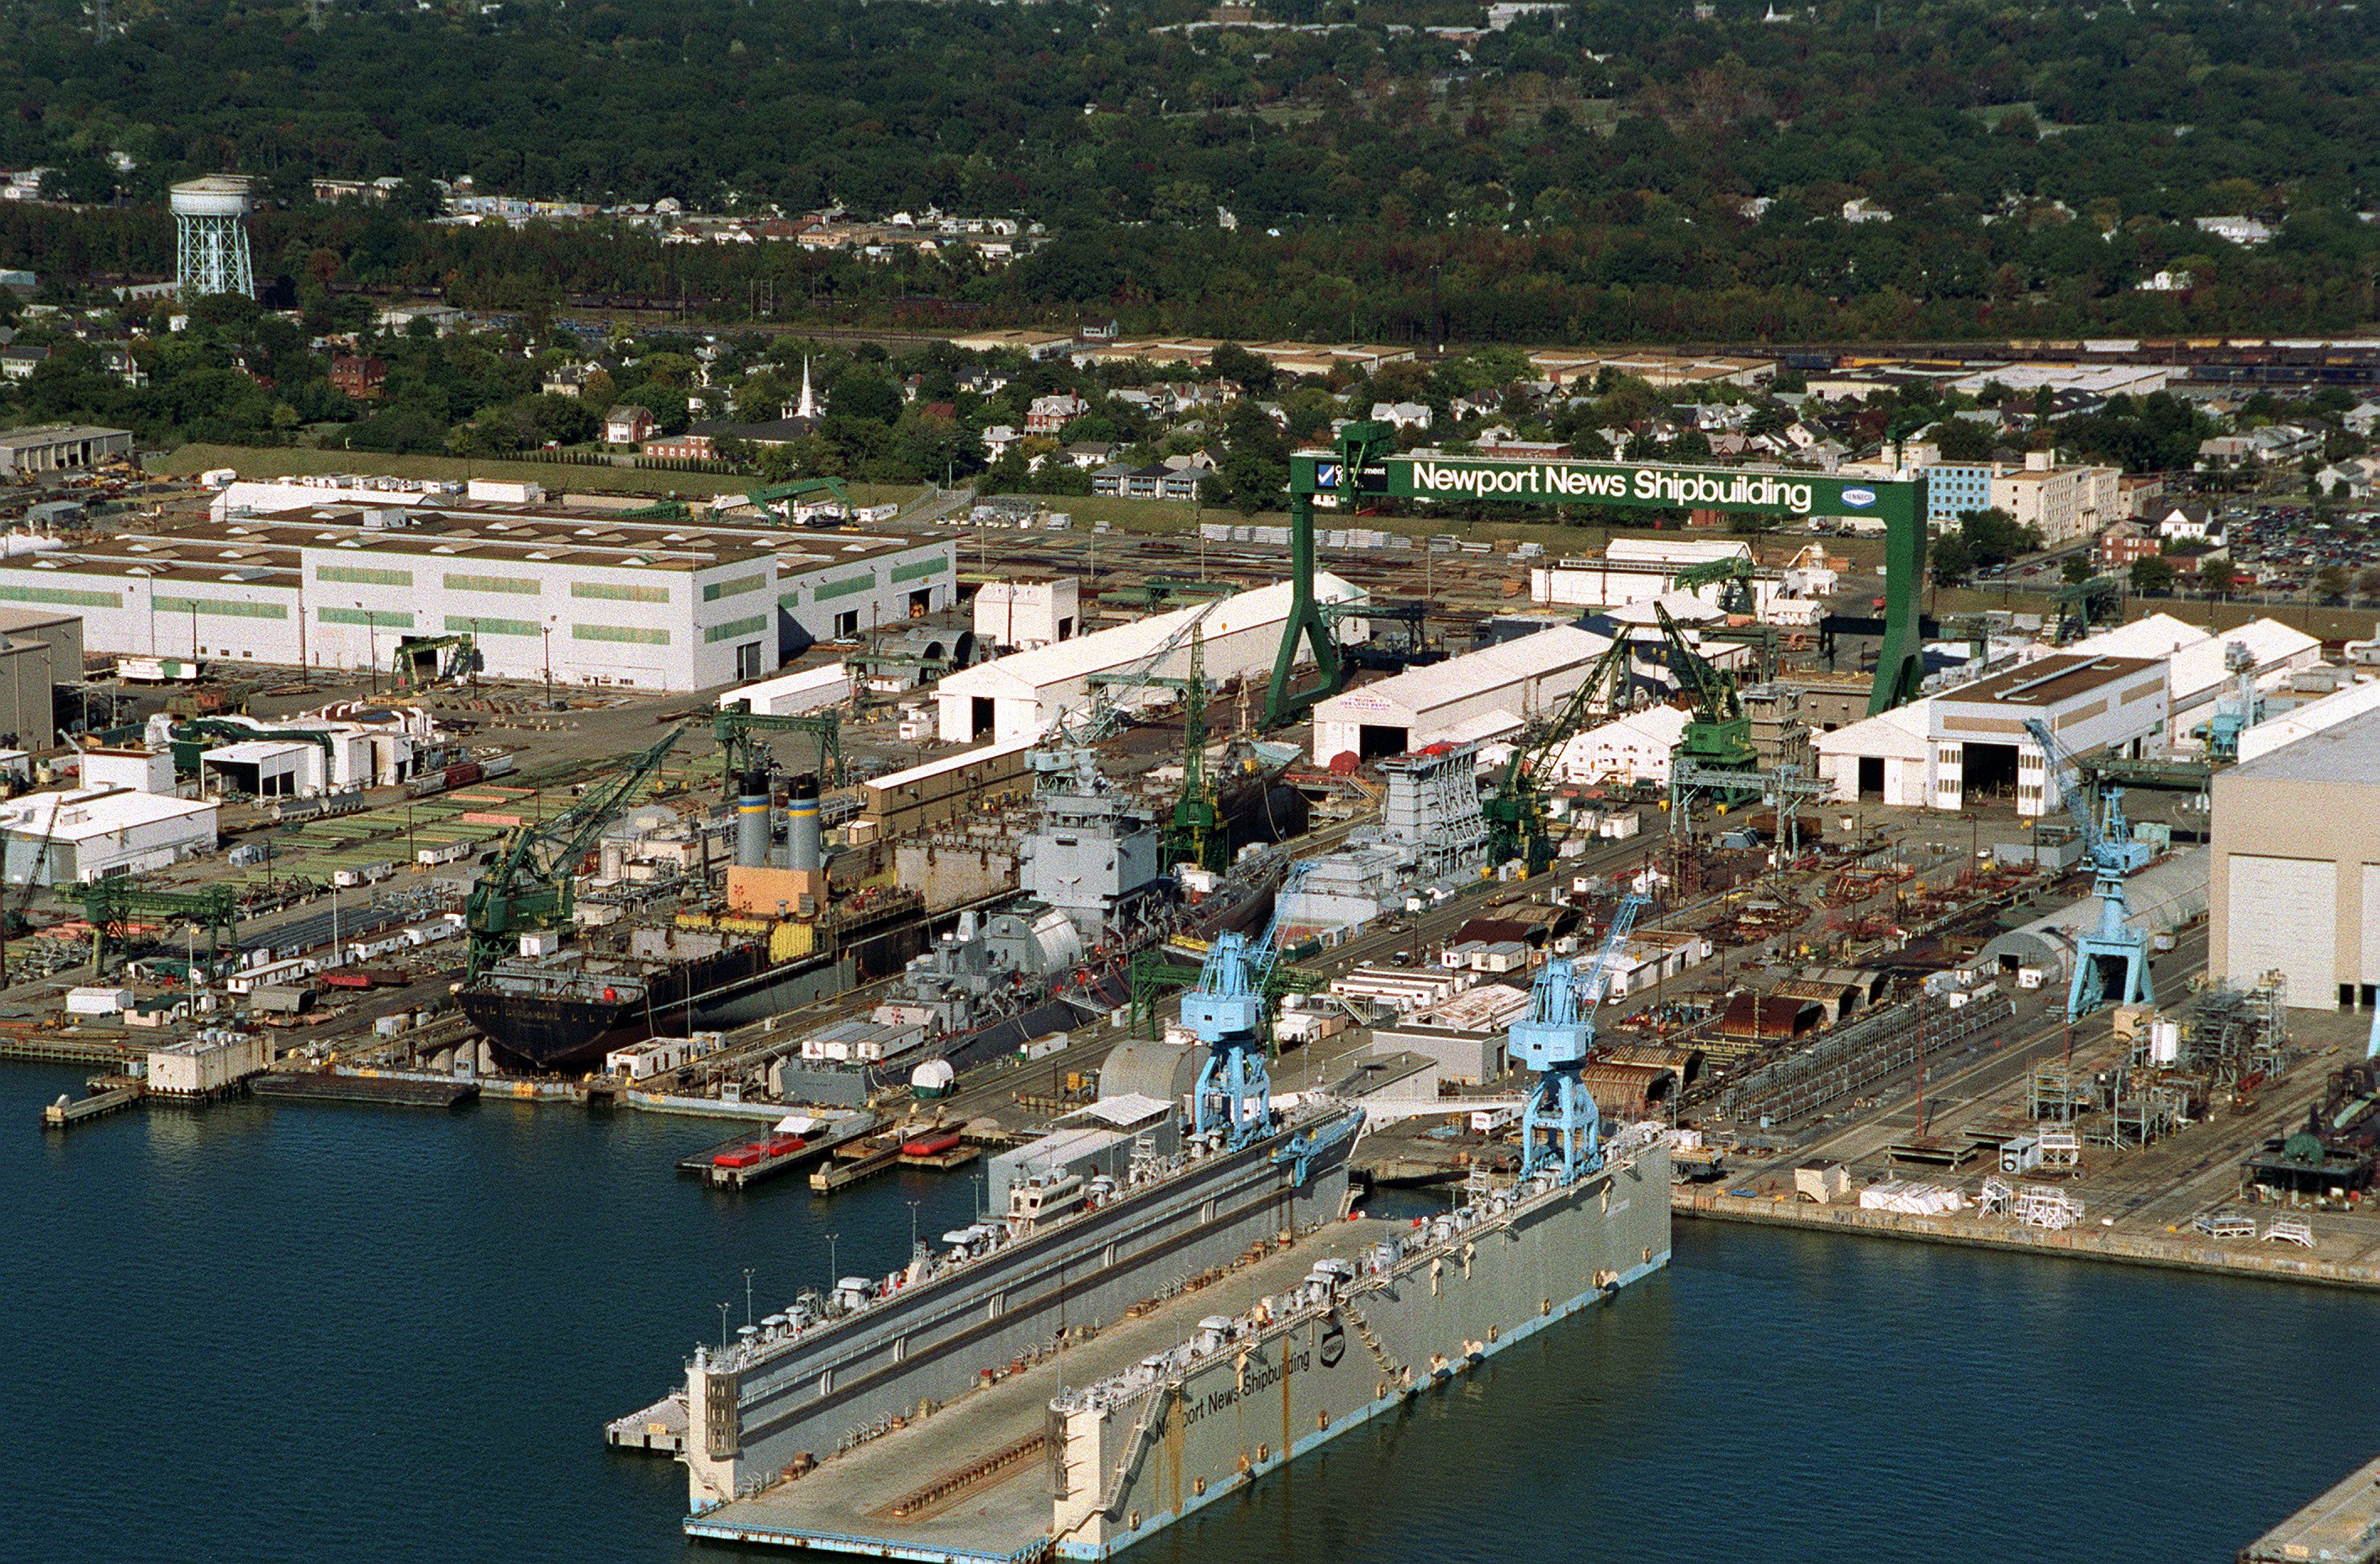 Newport_News_Shipyard%2C_aerial_view%2C_Oct_1994.jpeg